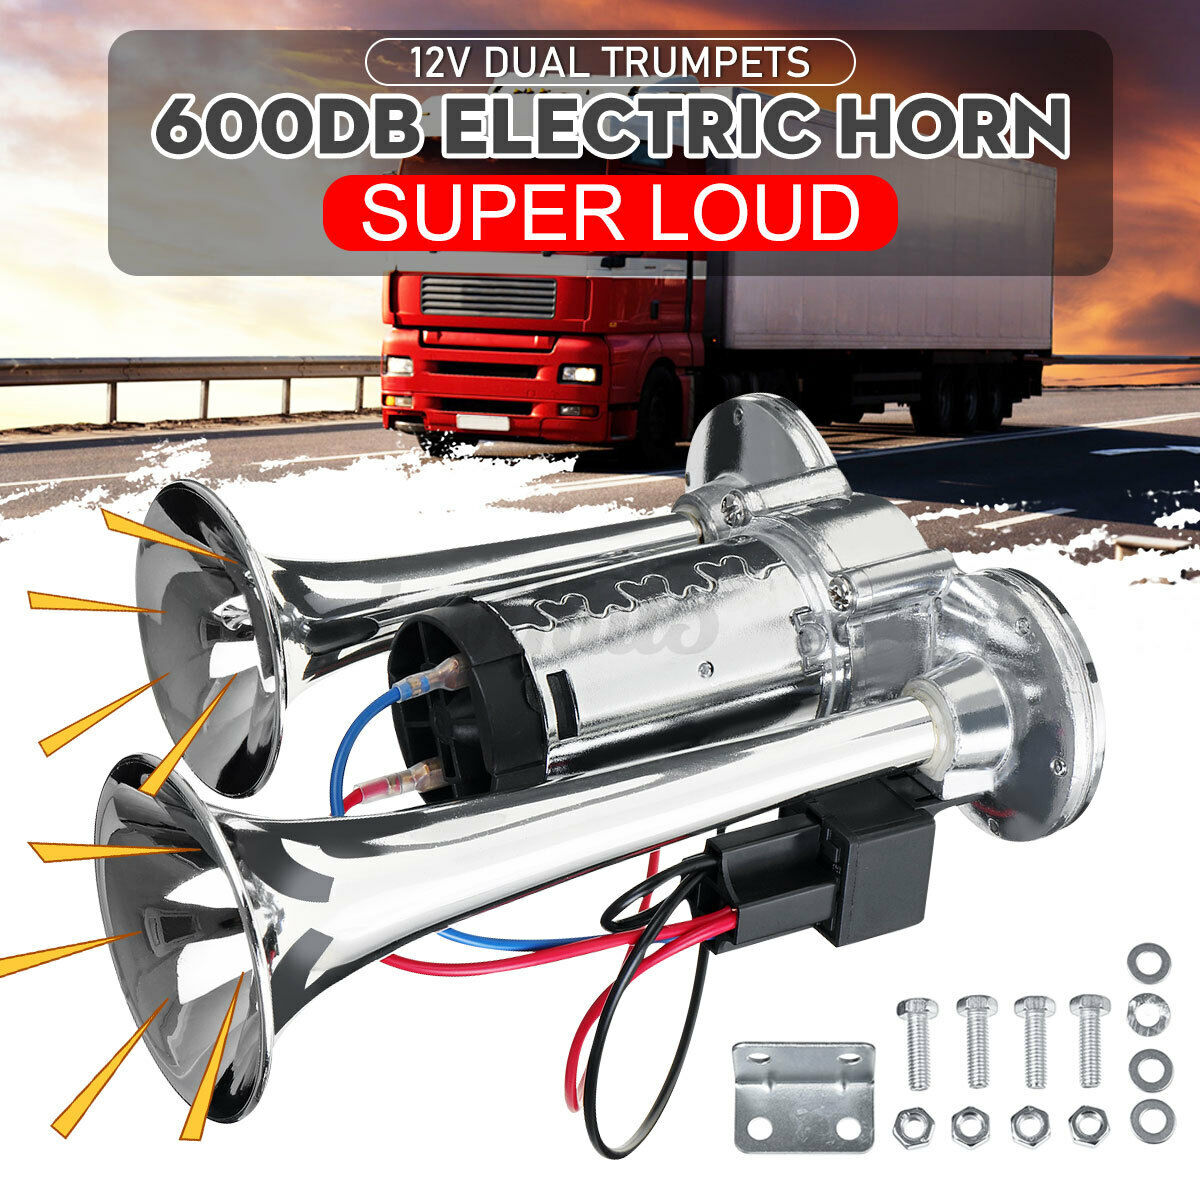 Trumpets Super Loud Car Electric Horn Truck Boat Train Speaker1X 600Db 12V Dual